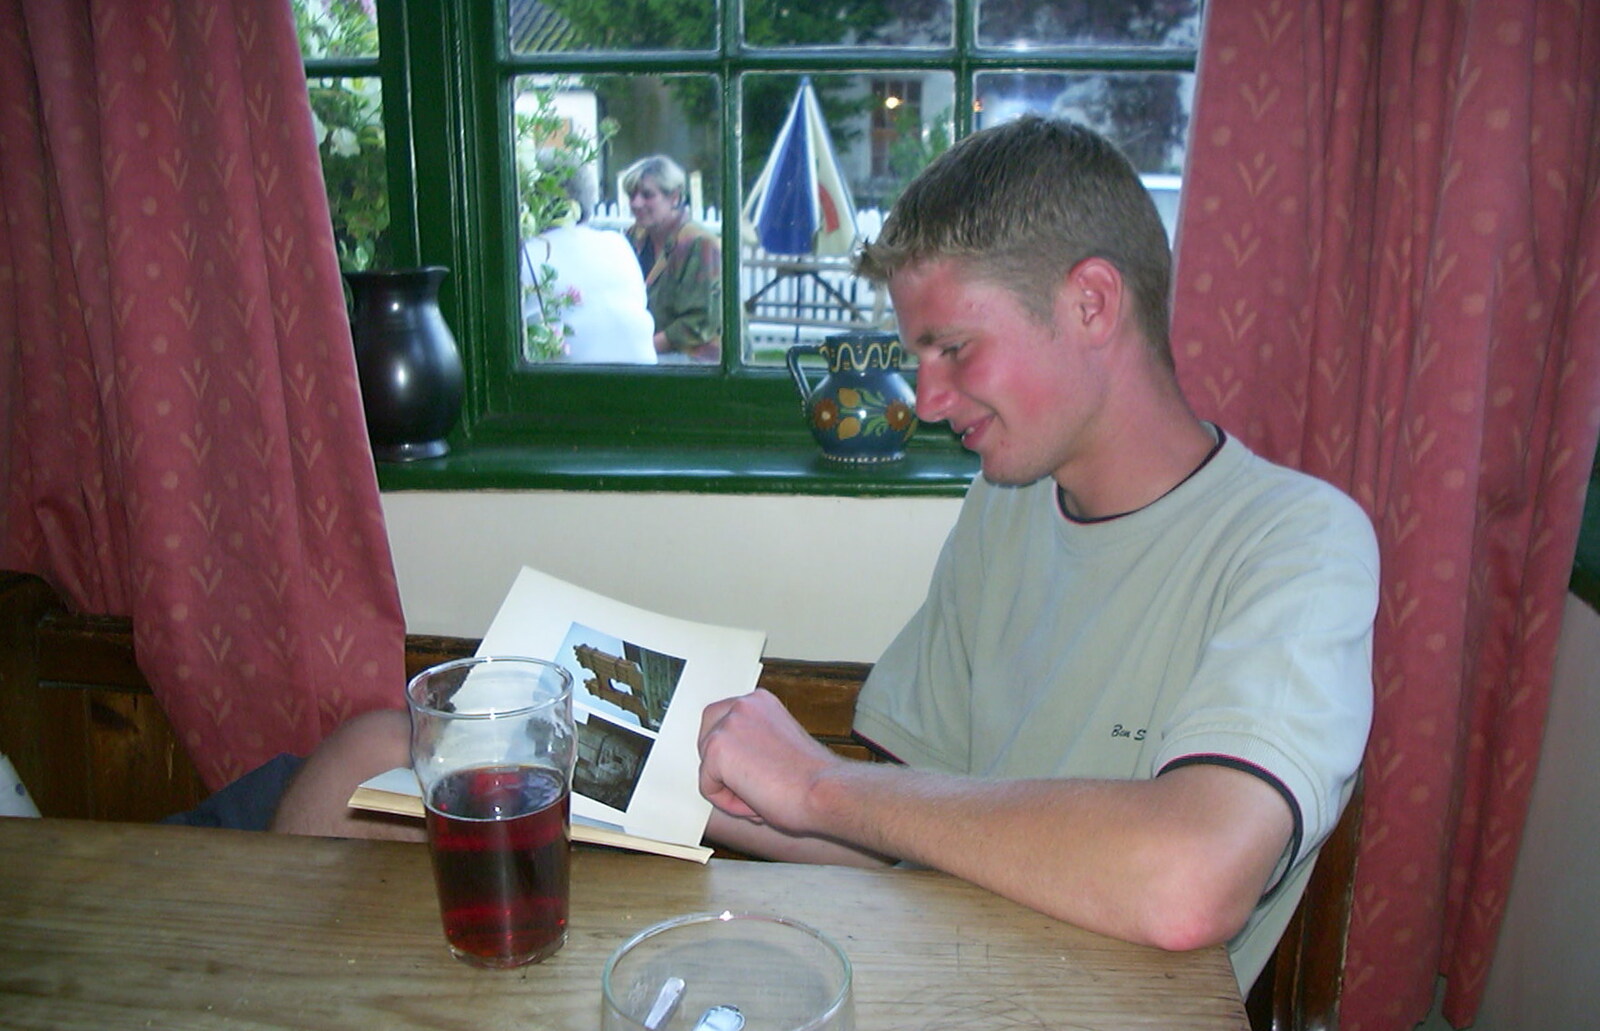 A BSCC Splinter Group Camping Weekend, Theberton, Suffolk - 11th August 2002: The Boy Phil reads a book